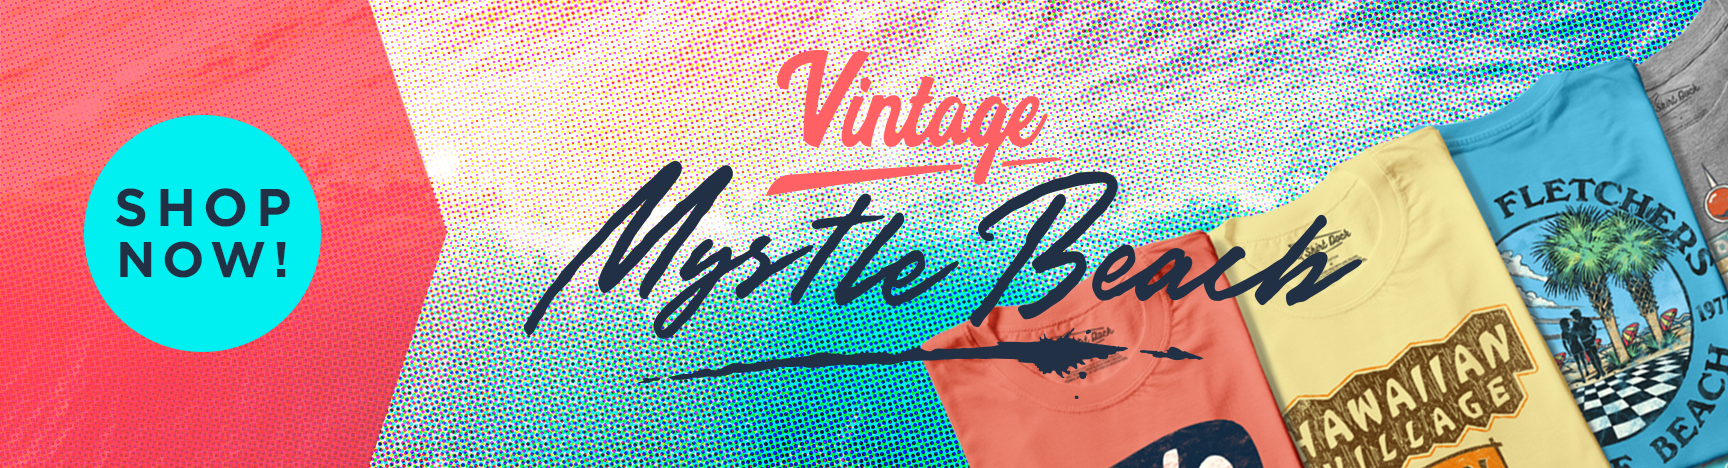 Vintage Myrtle Beach - Main Page Shop Banner.png